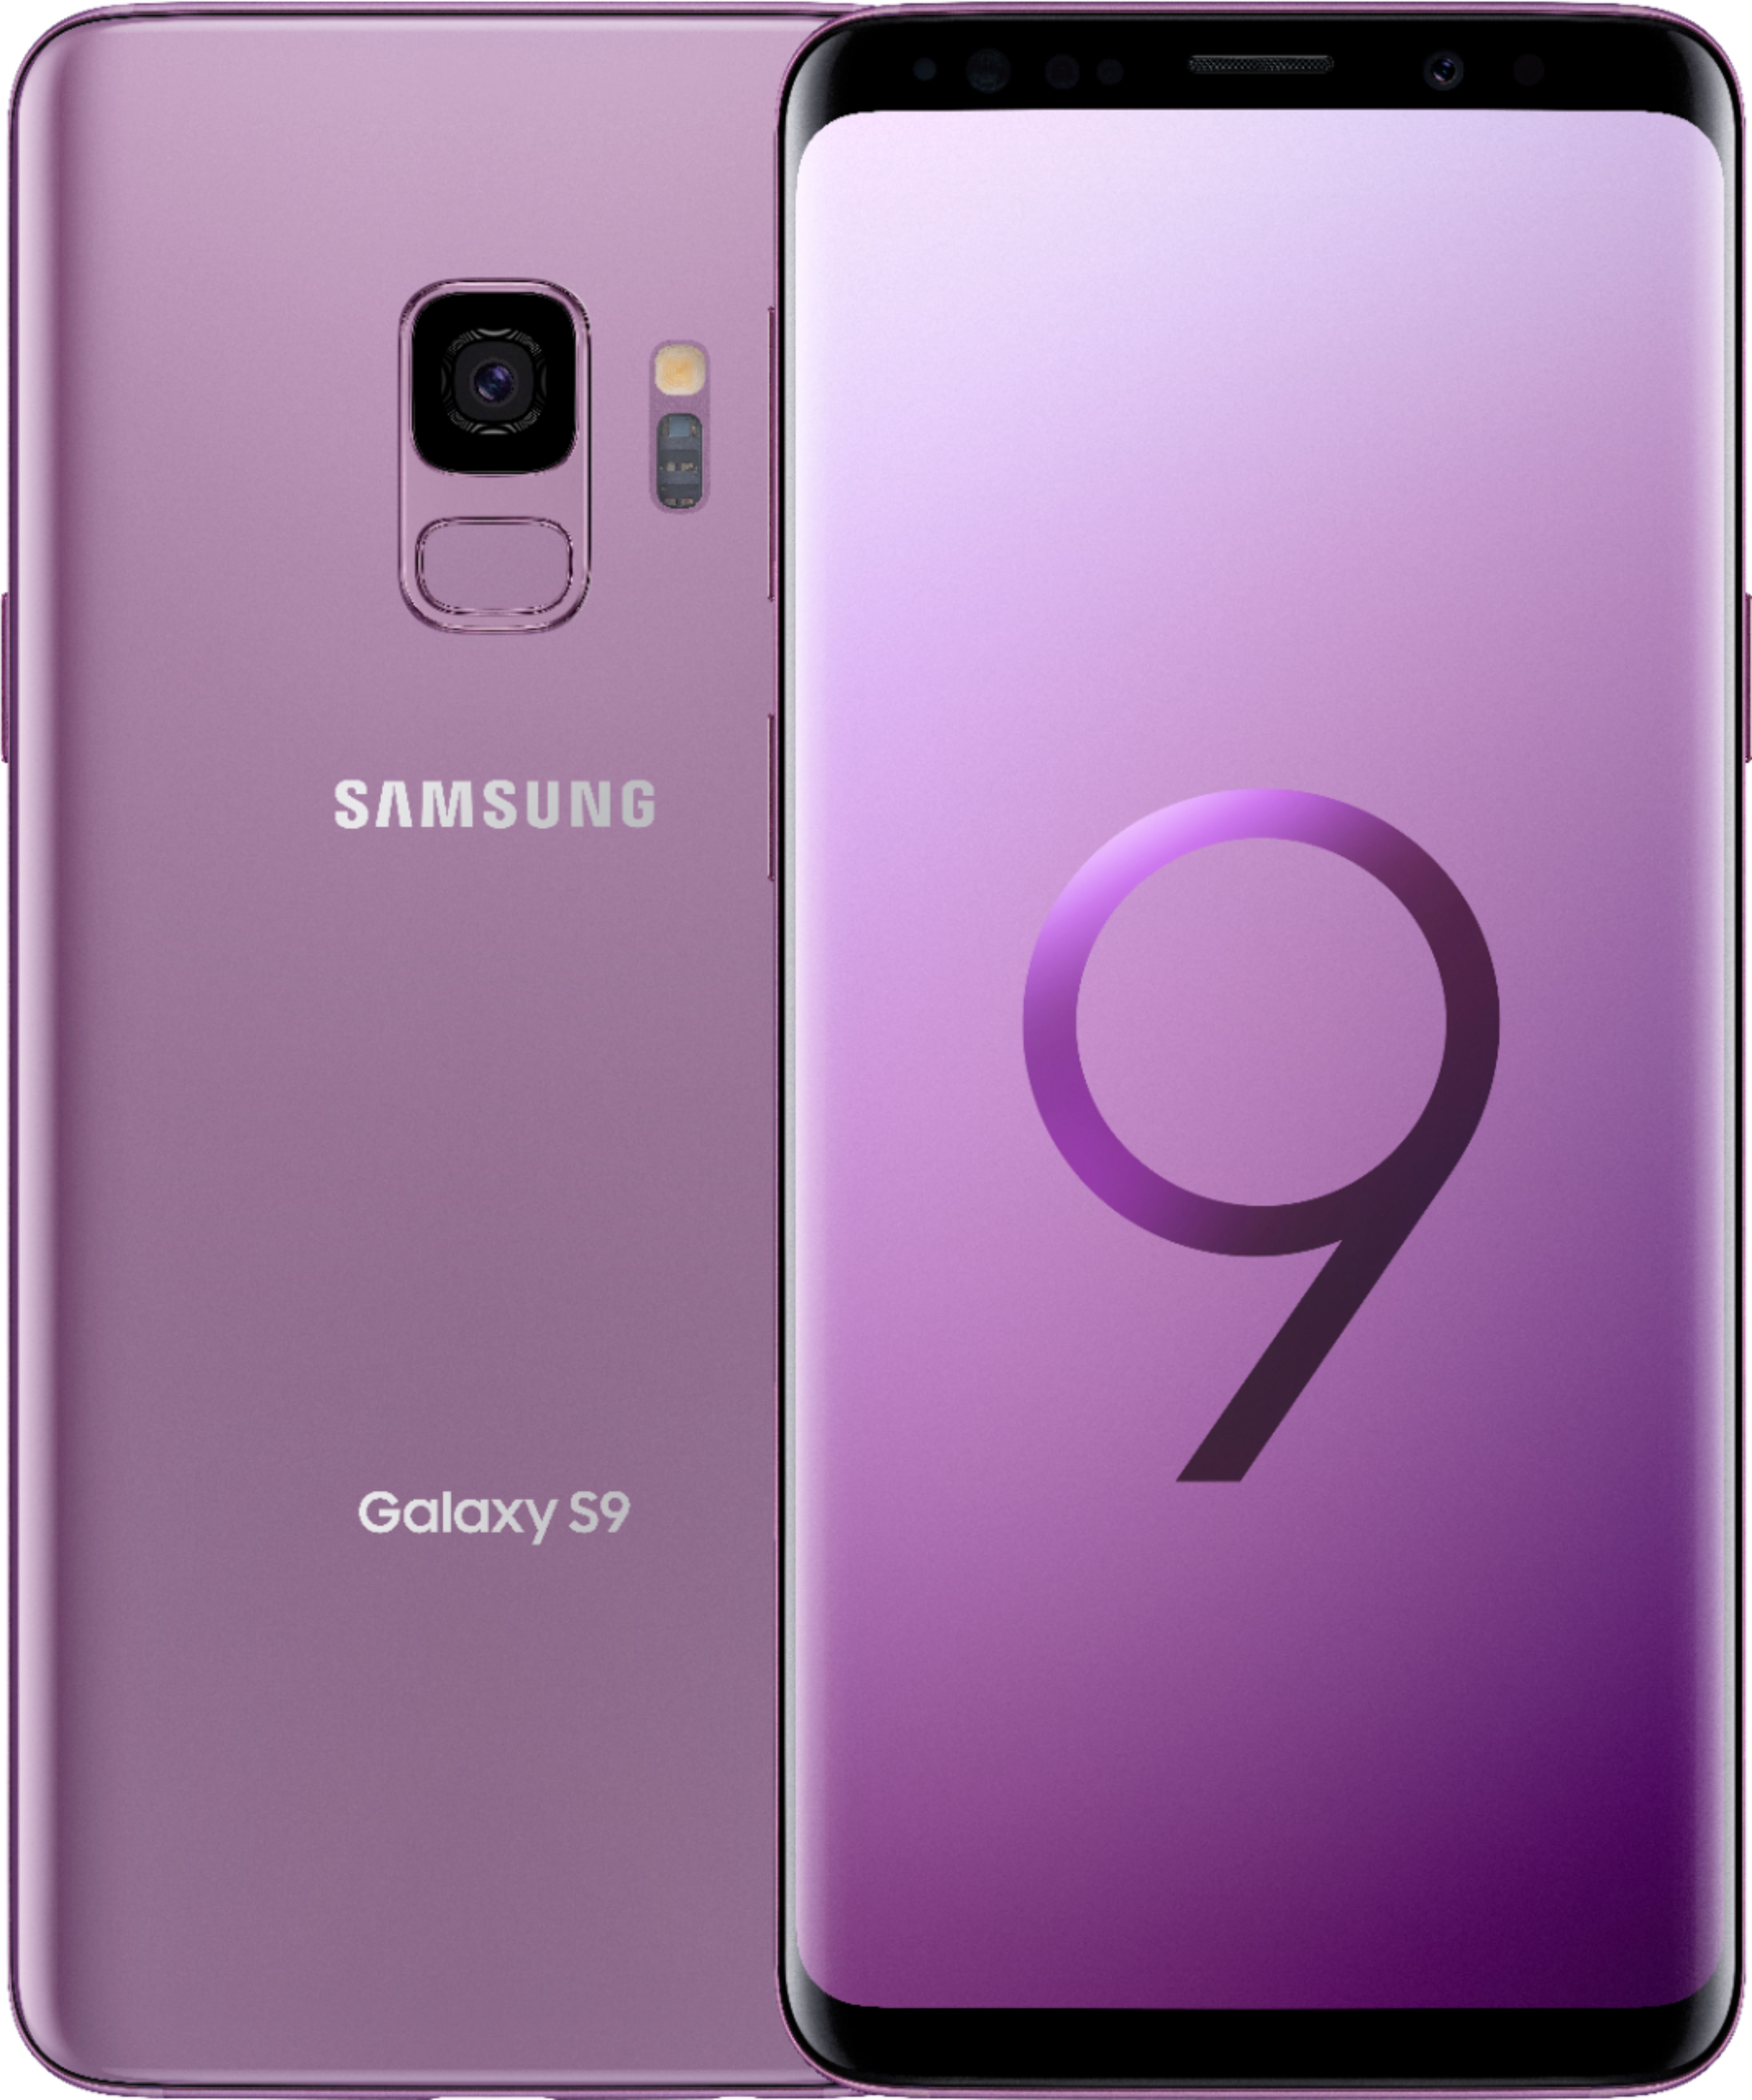 良品】Galaxy S9 Lilac Purple au版SIMフリー | myglobaltax.com